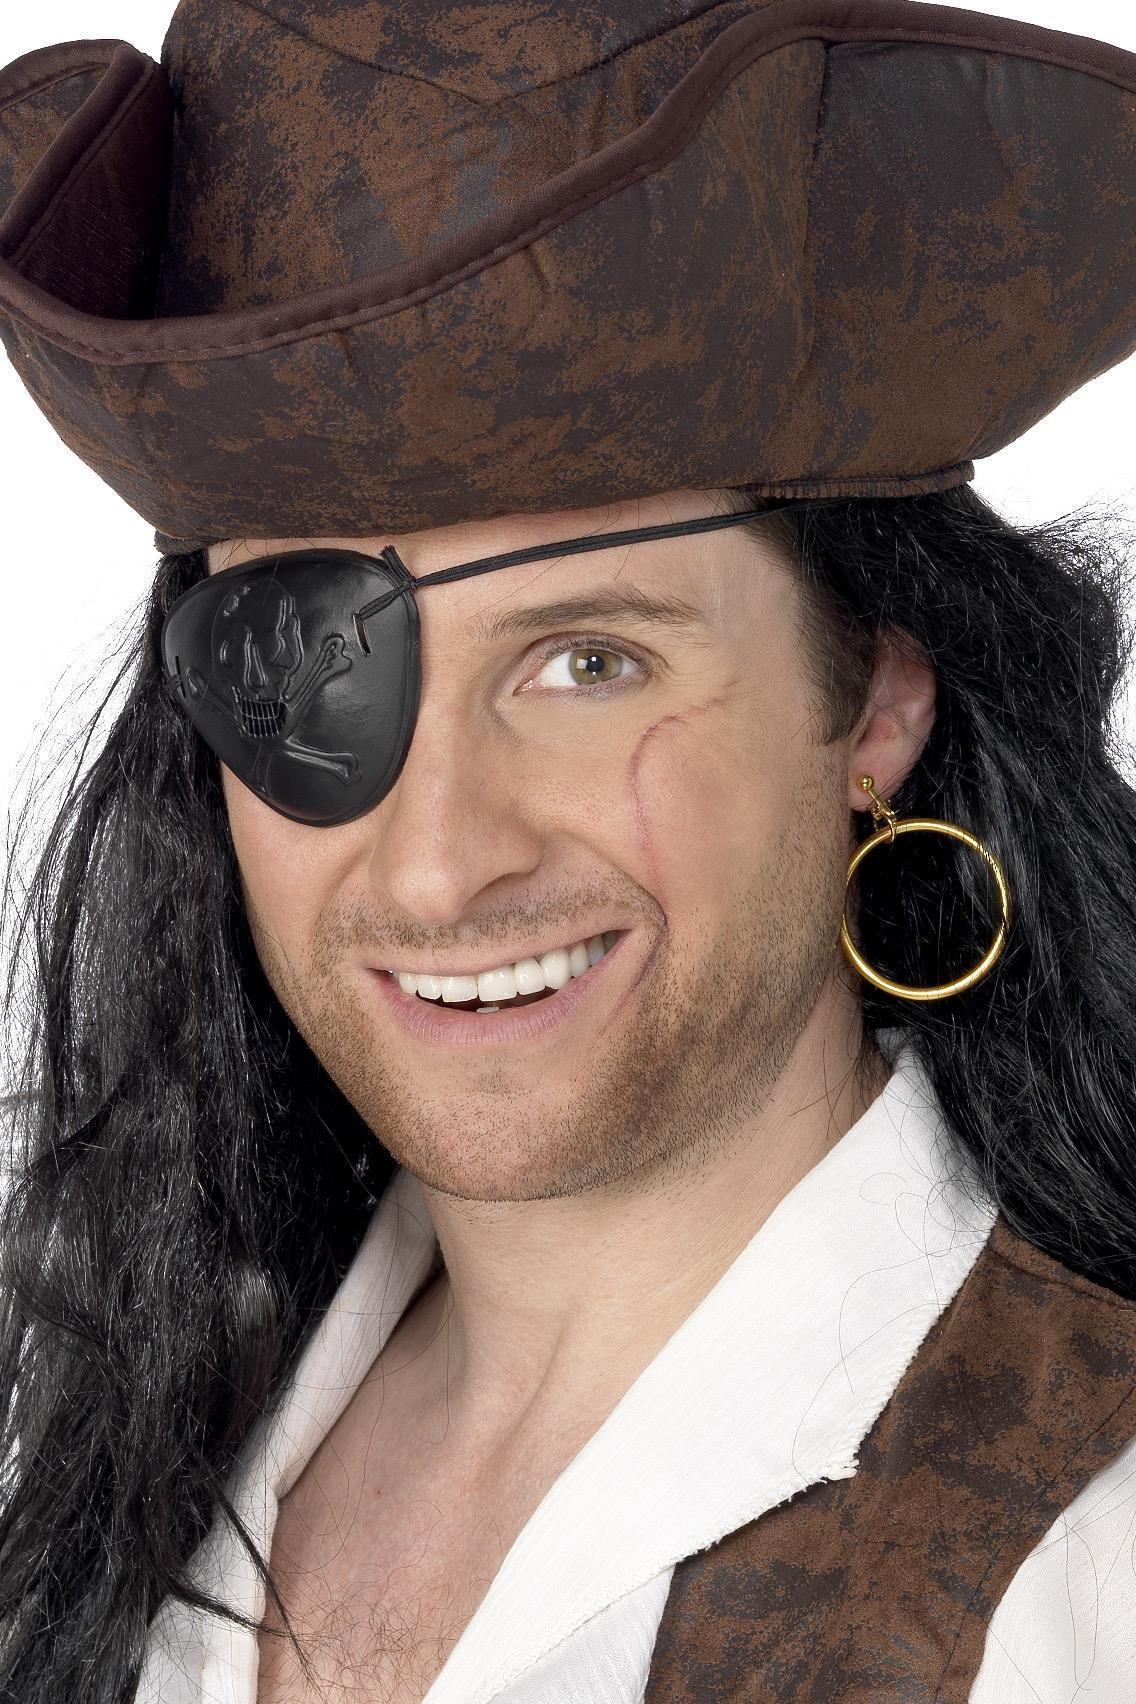 Pirate Eyepatch & Earring Set